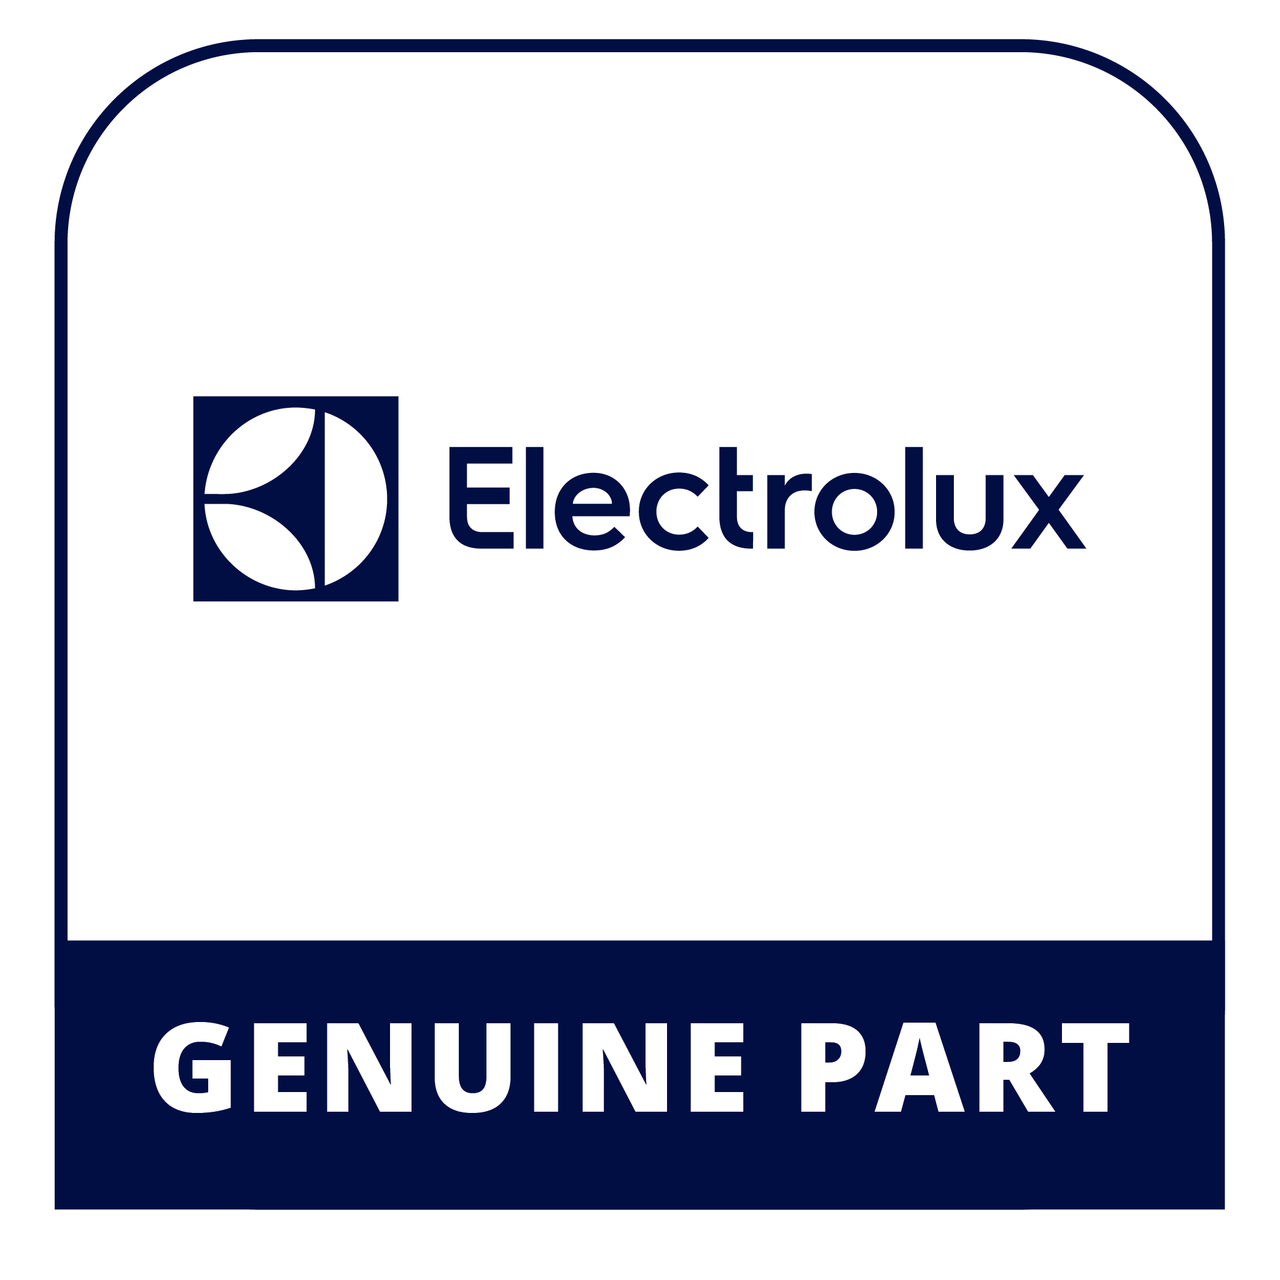 Frigidaire - Electrolux 137291010 Power Supply - Genuine Electrolux Part